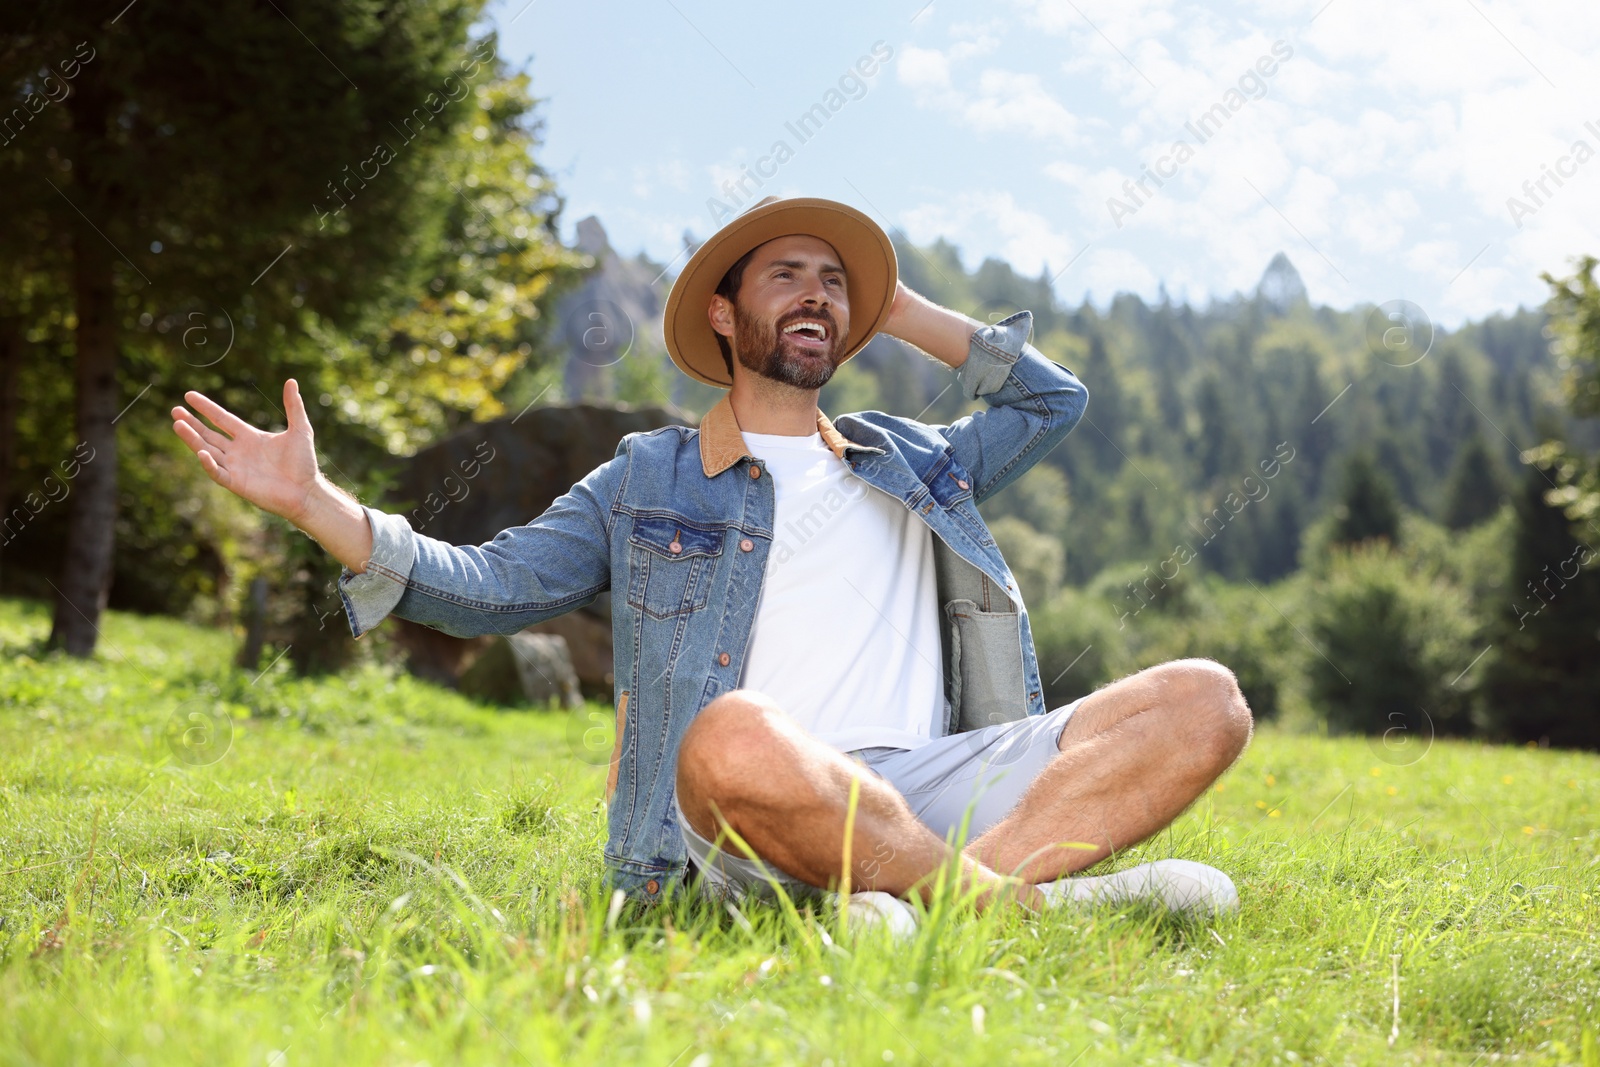 Photo of Feeling freedom. Smiling man enjoying nature on green grass outdoors